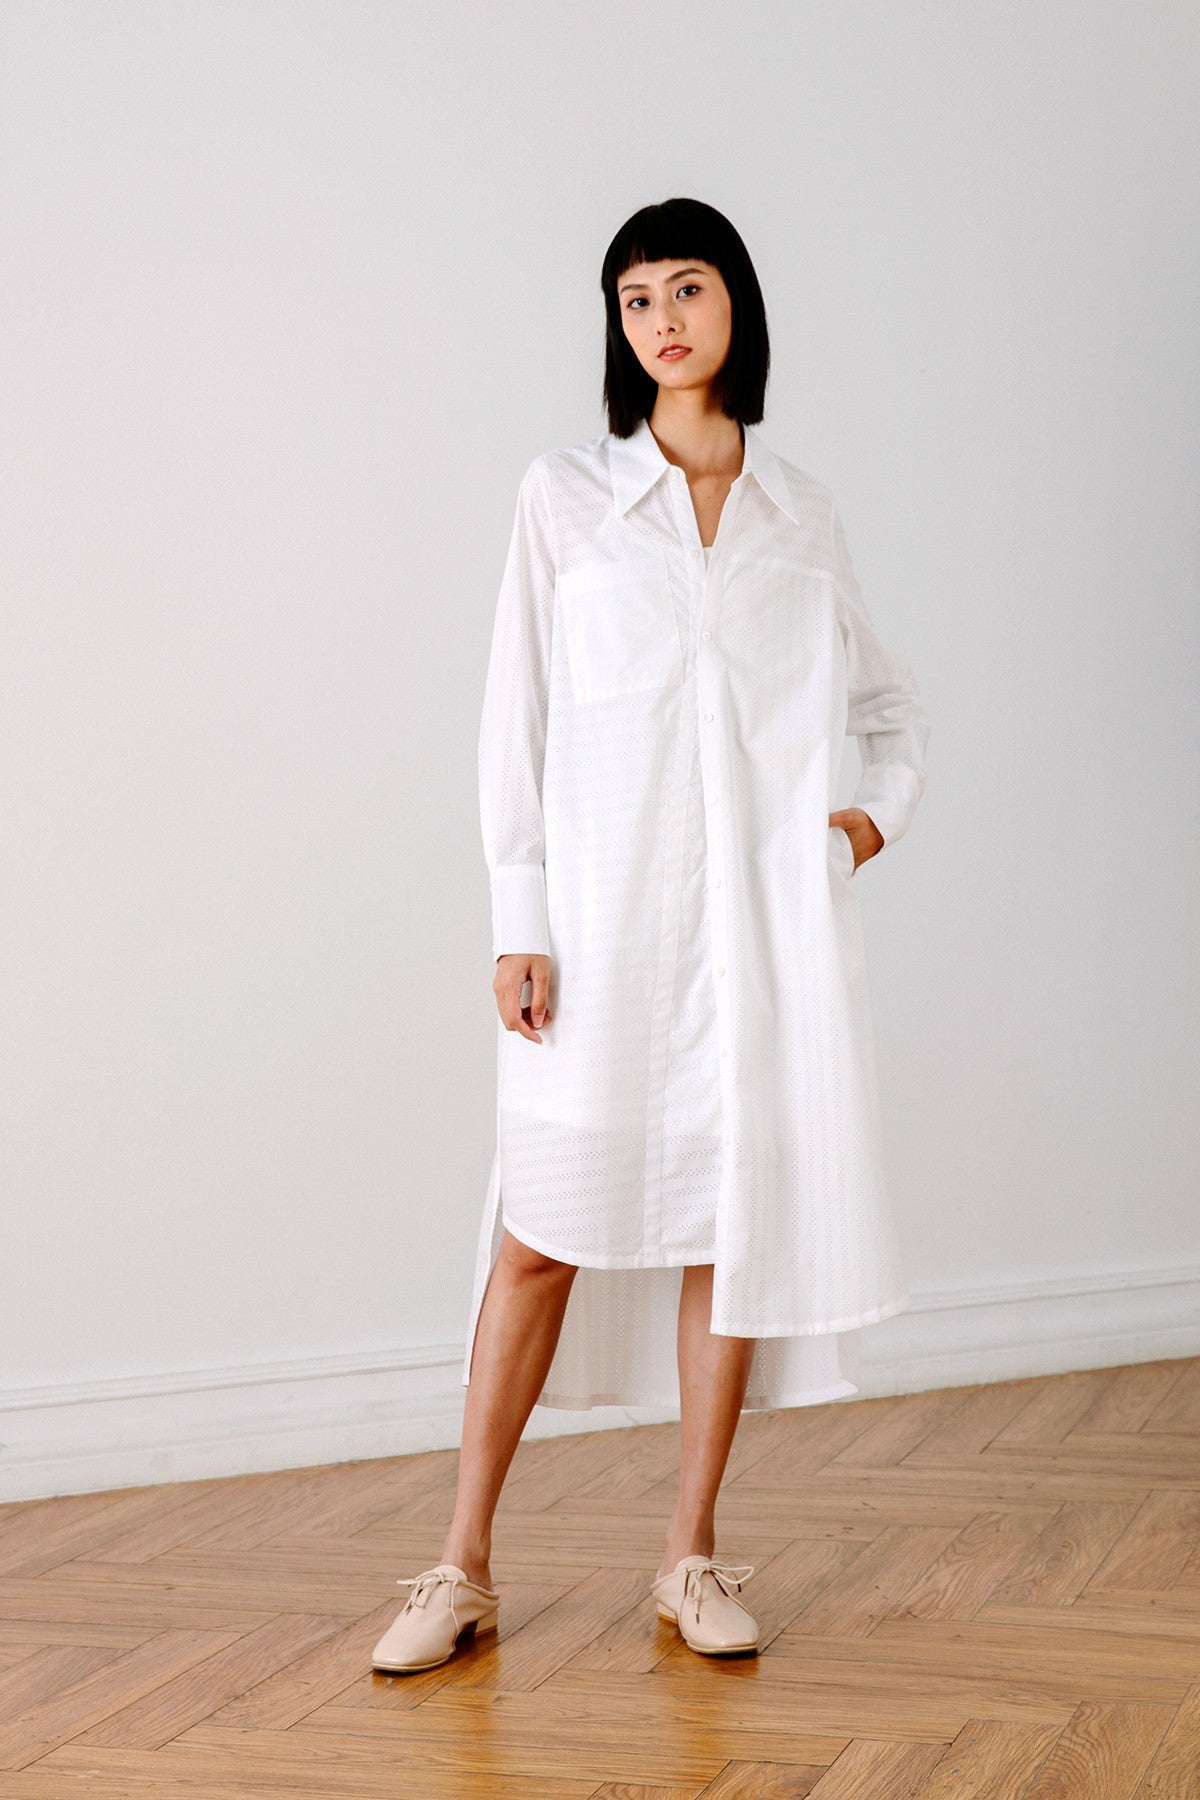 SKYE San Francisco SF California shop ethical sustainable modern chic minimalist luxury clothing women fashion Olivia Shirt Dress white 2